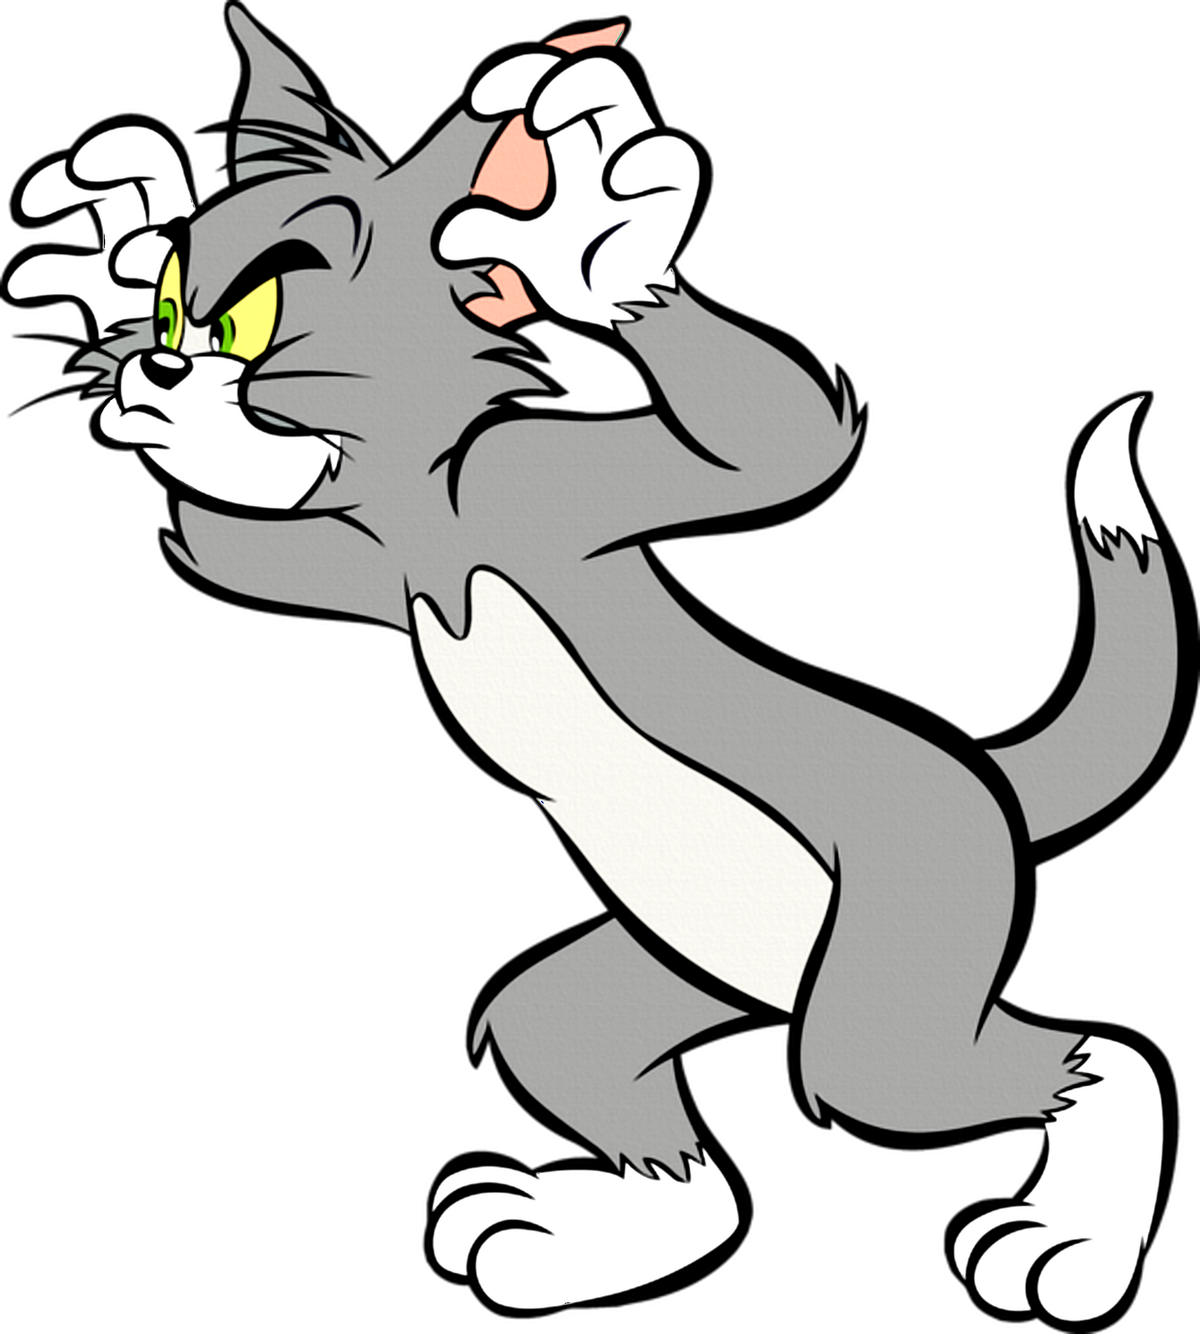 Tom and Jerry director Gene Deitch is dead | Premium Times Nigeria